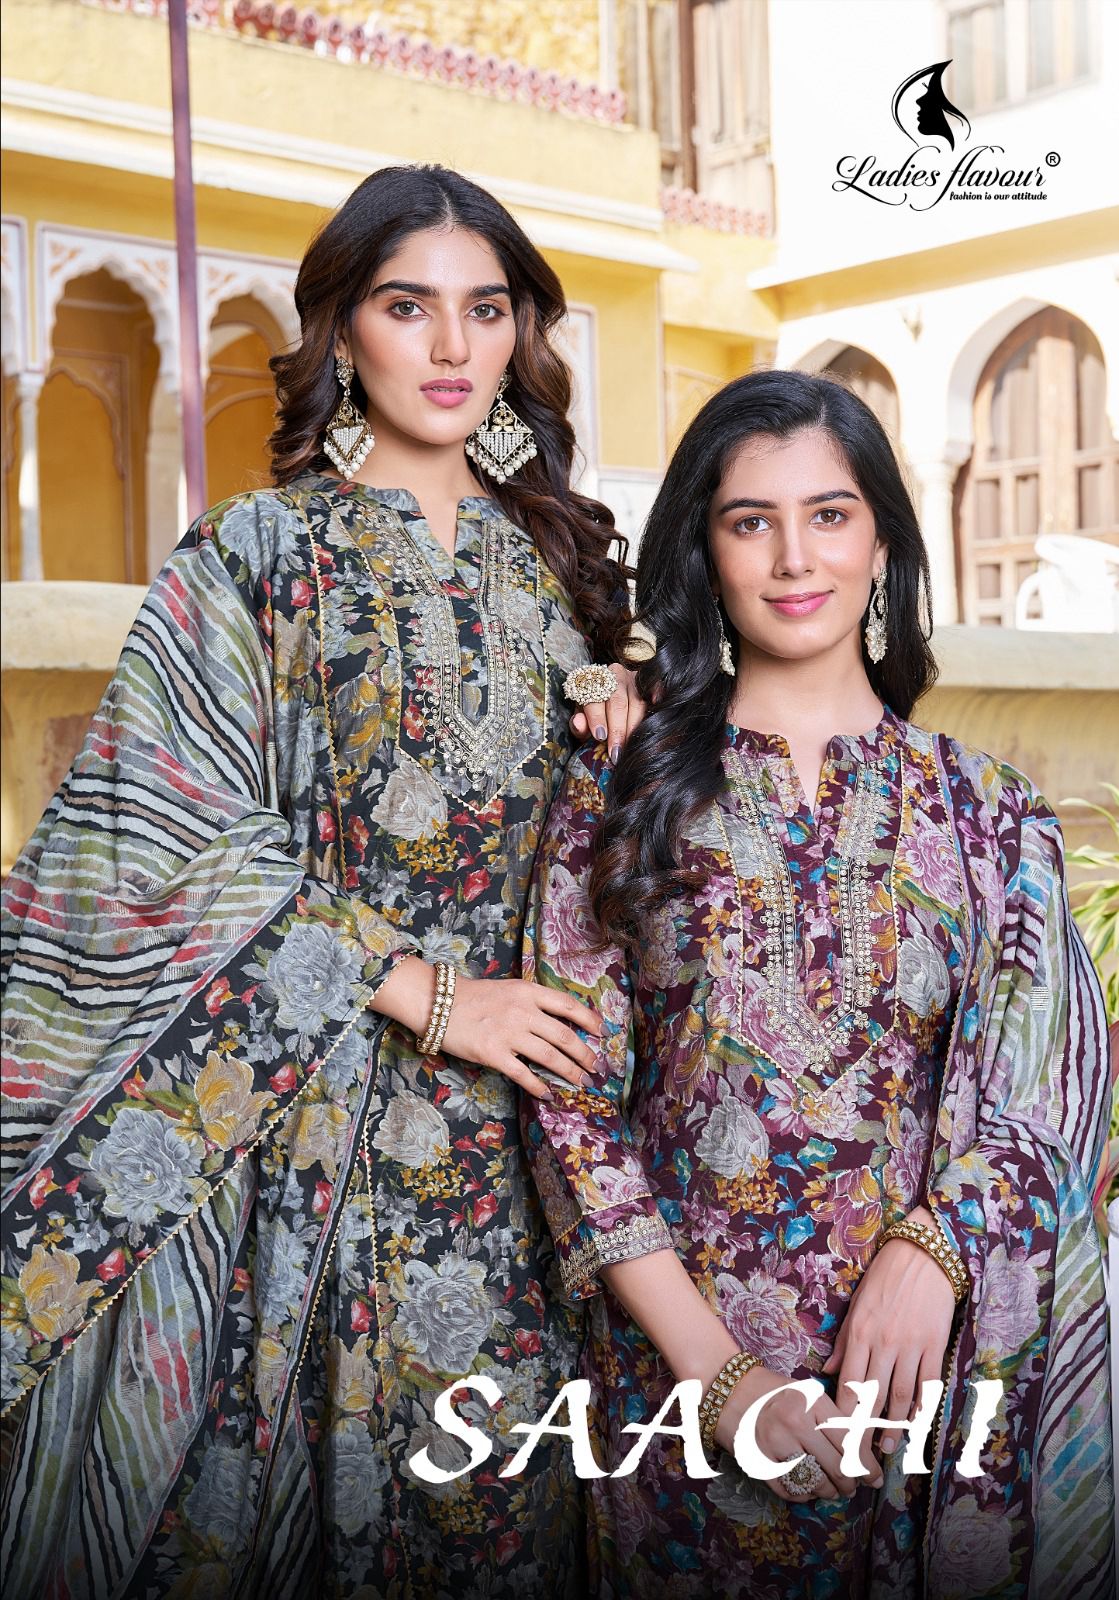 Saachi Ladies Flavour Chanderi Afghani Readymade Suit